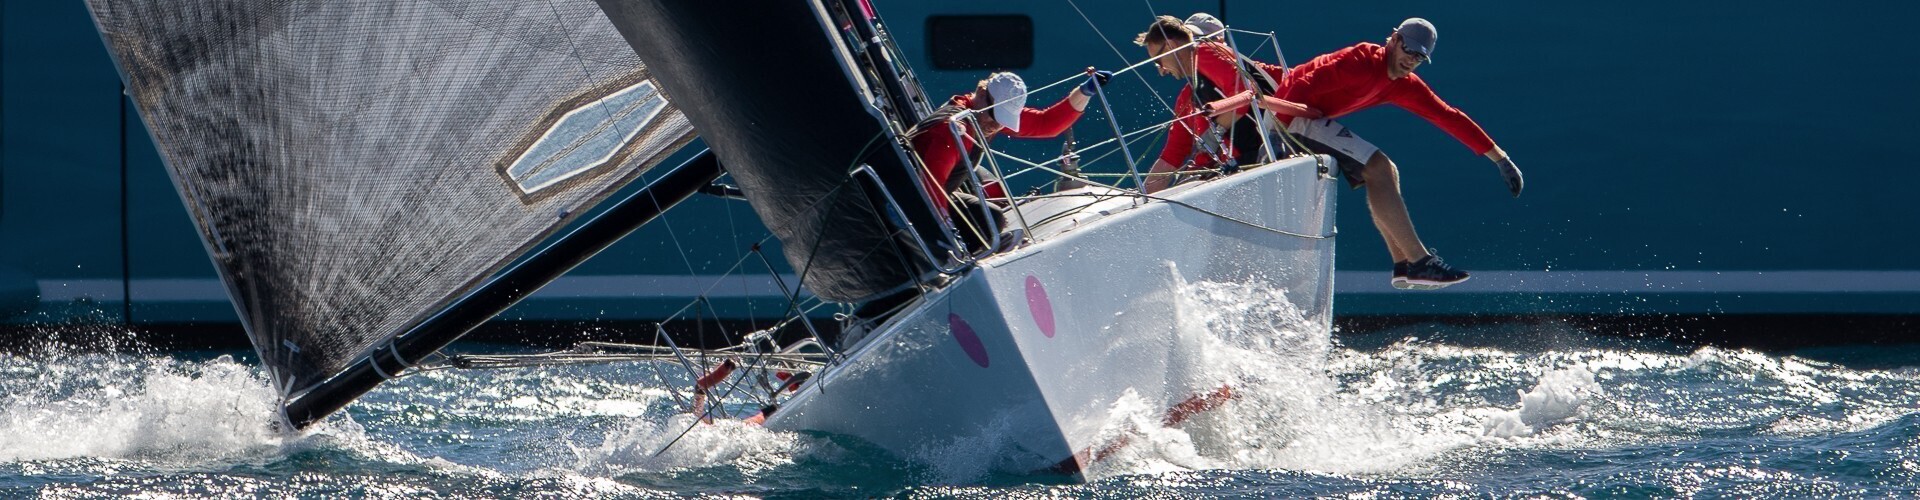 voyage photo sport action vincent frances header